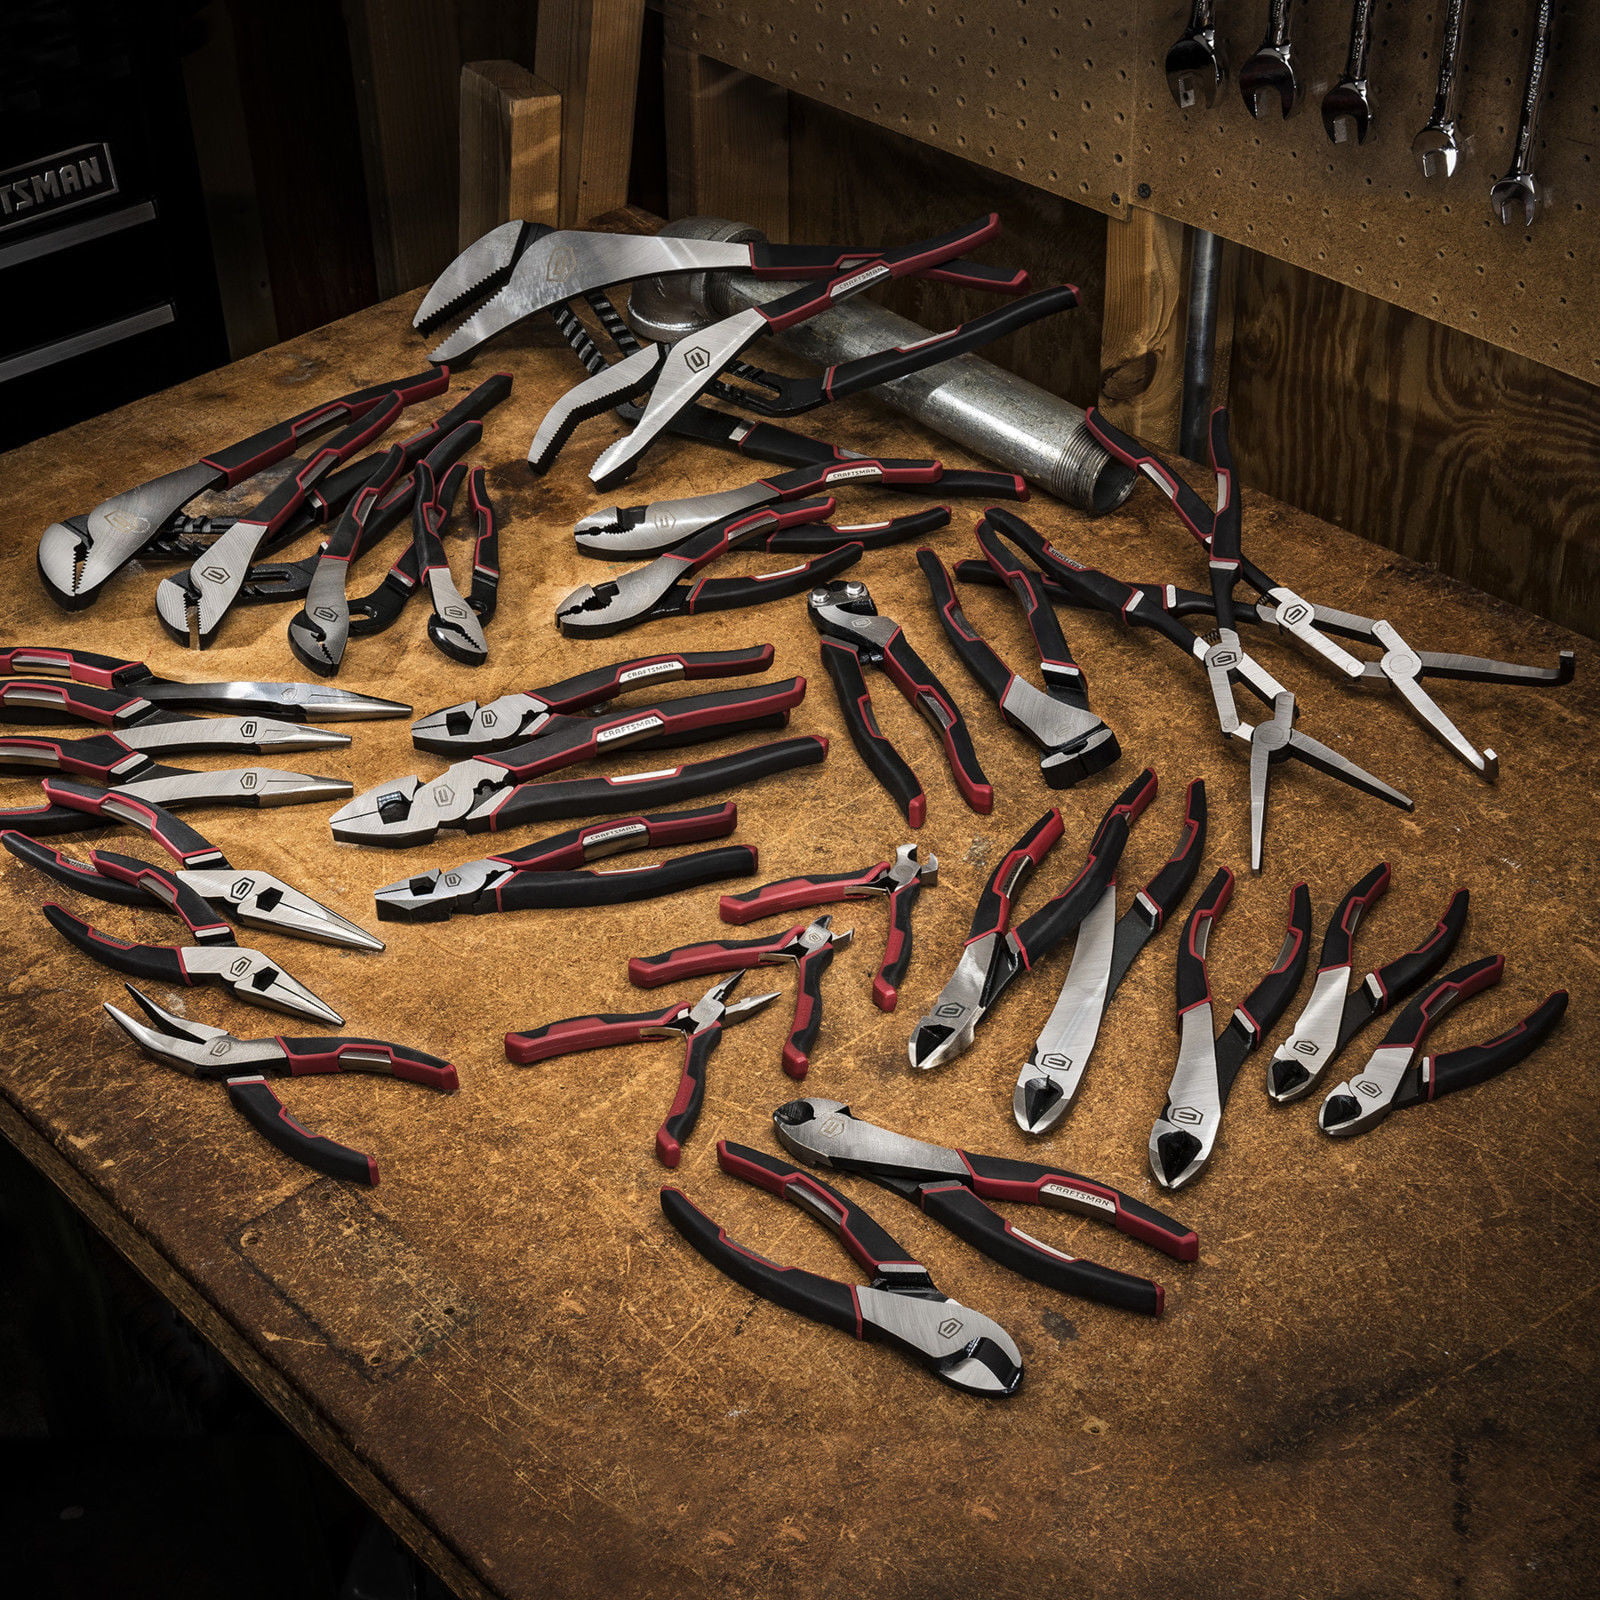 Craftsman TruGrip Handles Pliers Set - Pack of 4 (28070) for sale